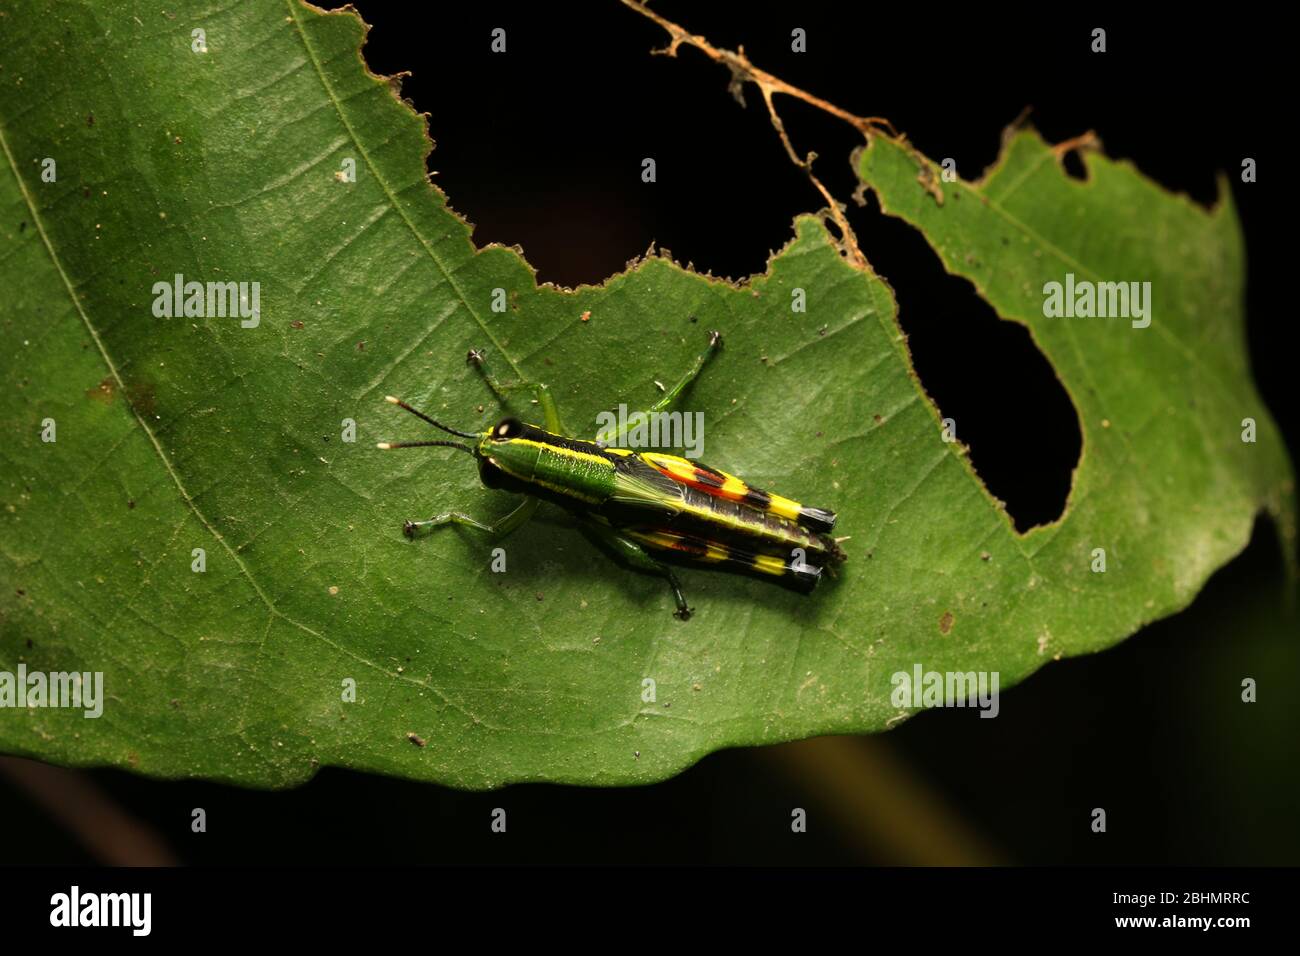 Short Horned Grasshopper, Tauchira polychroa Stock Photo